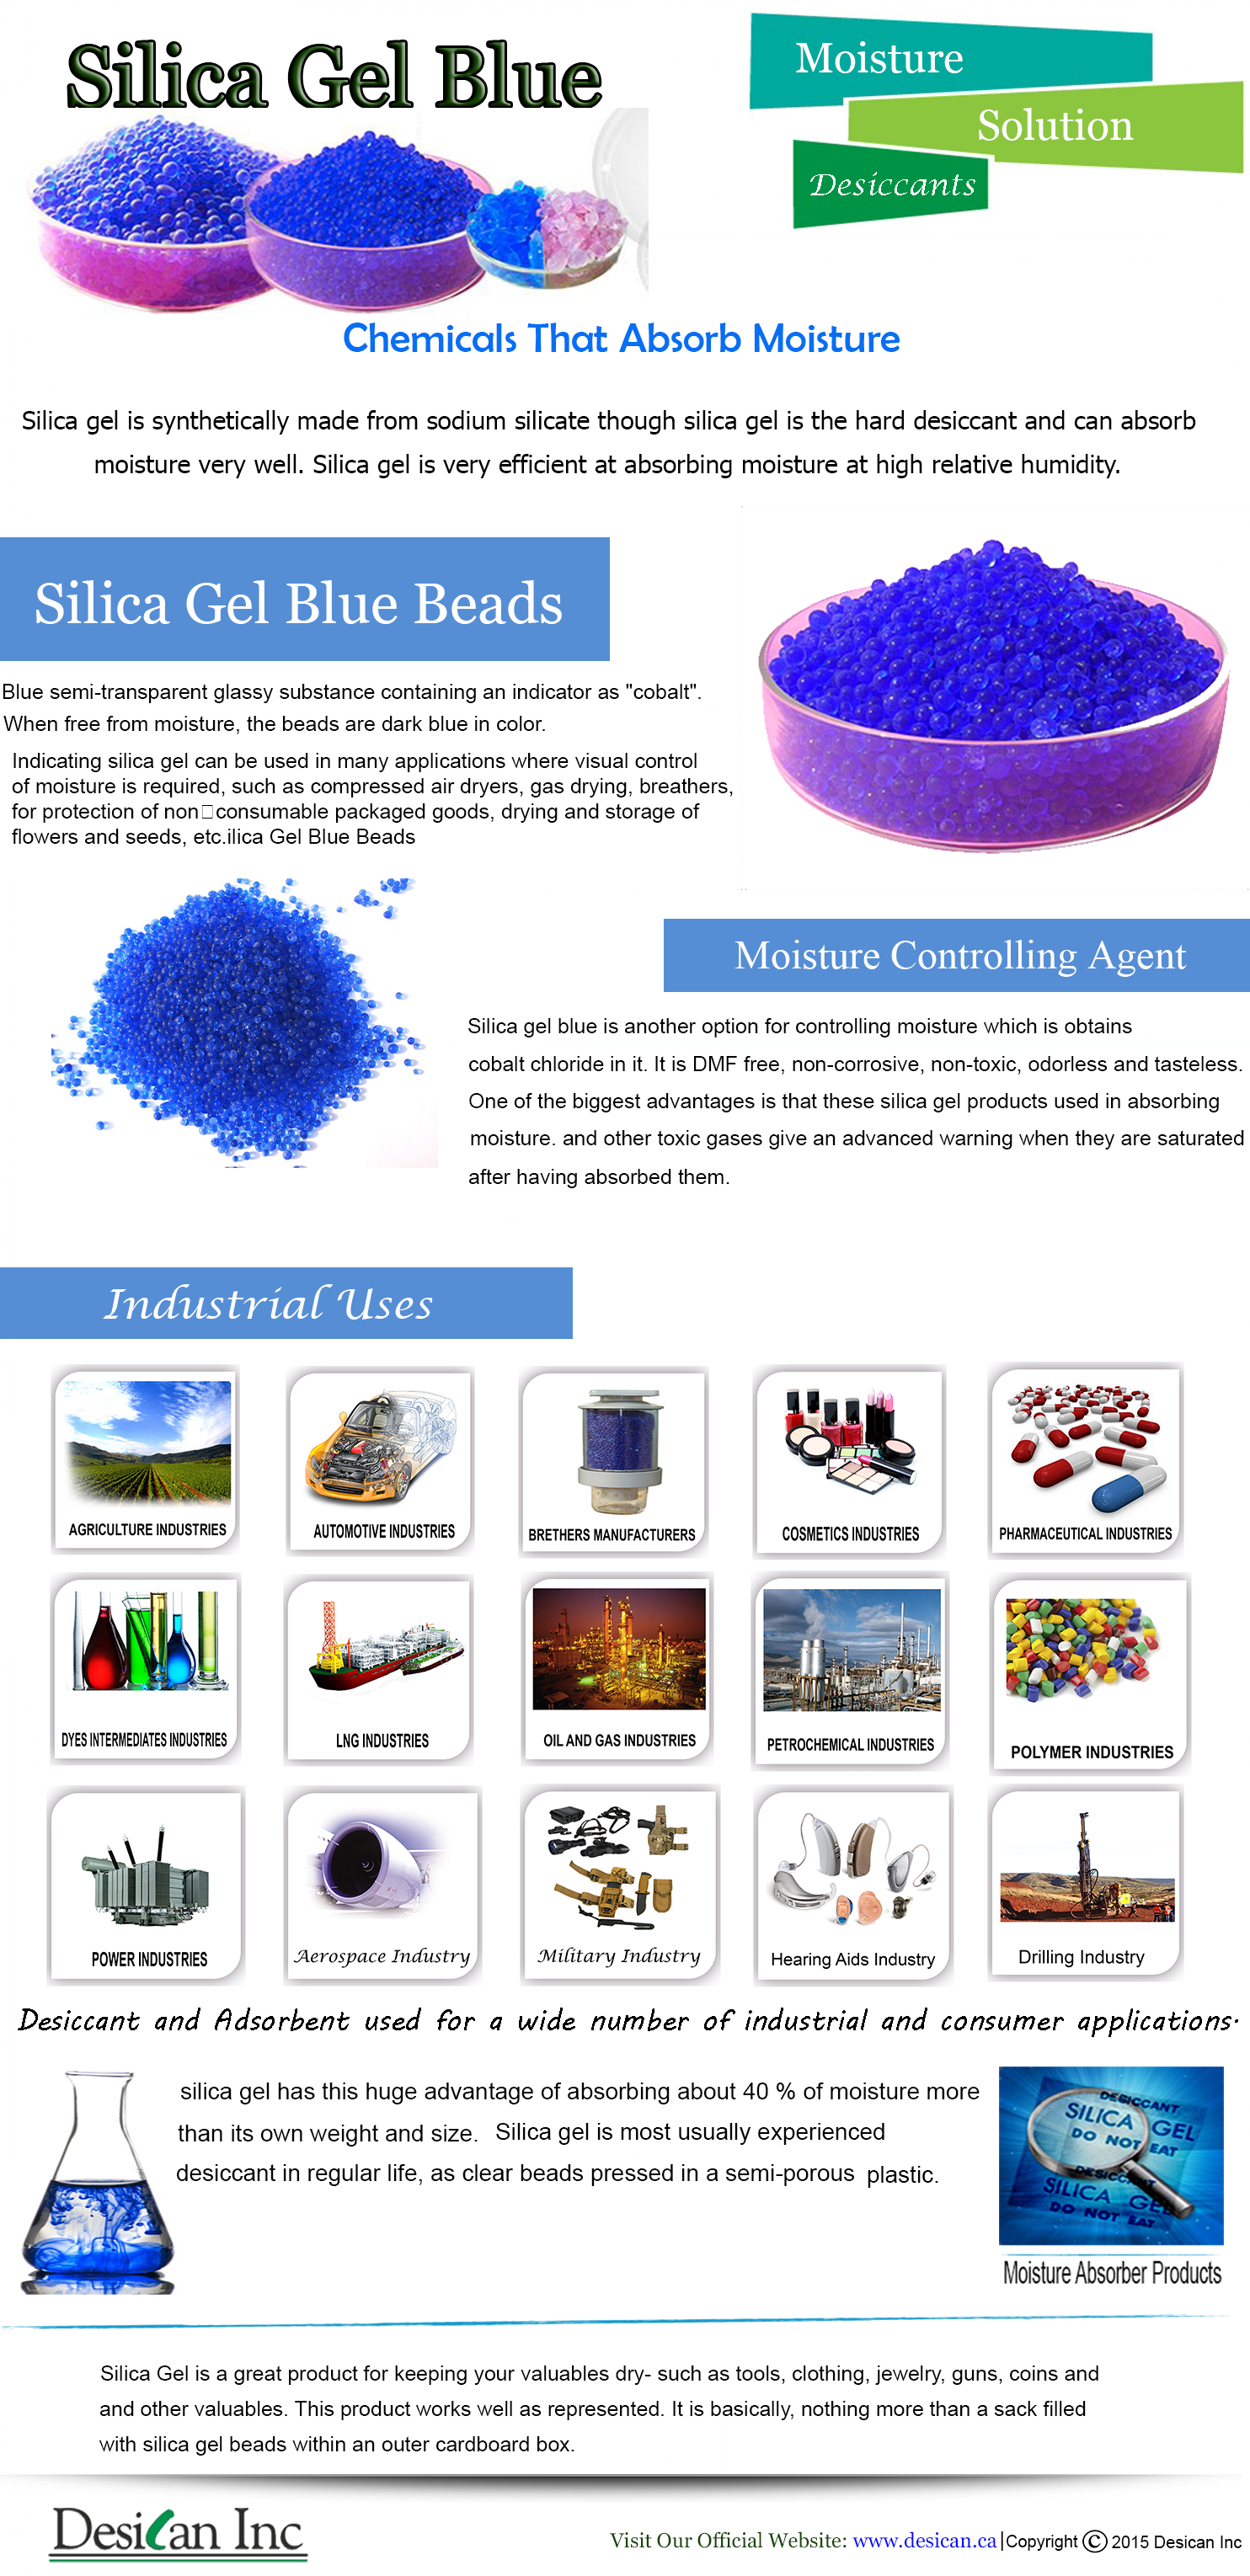 Silica Gel Blue - Chemical That Absorb Moisture